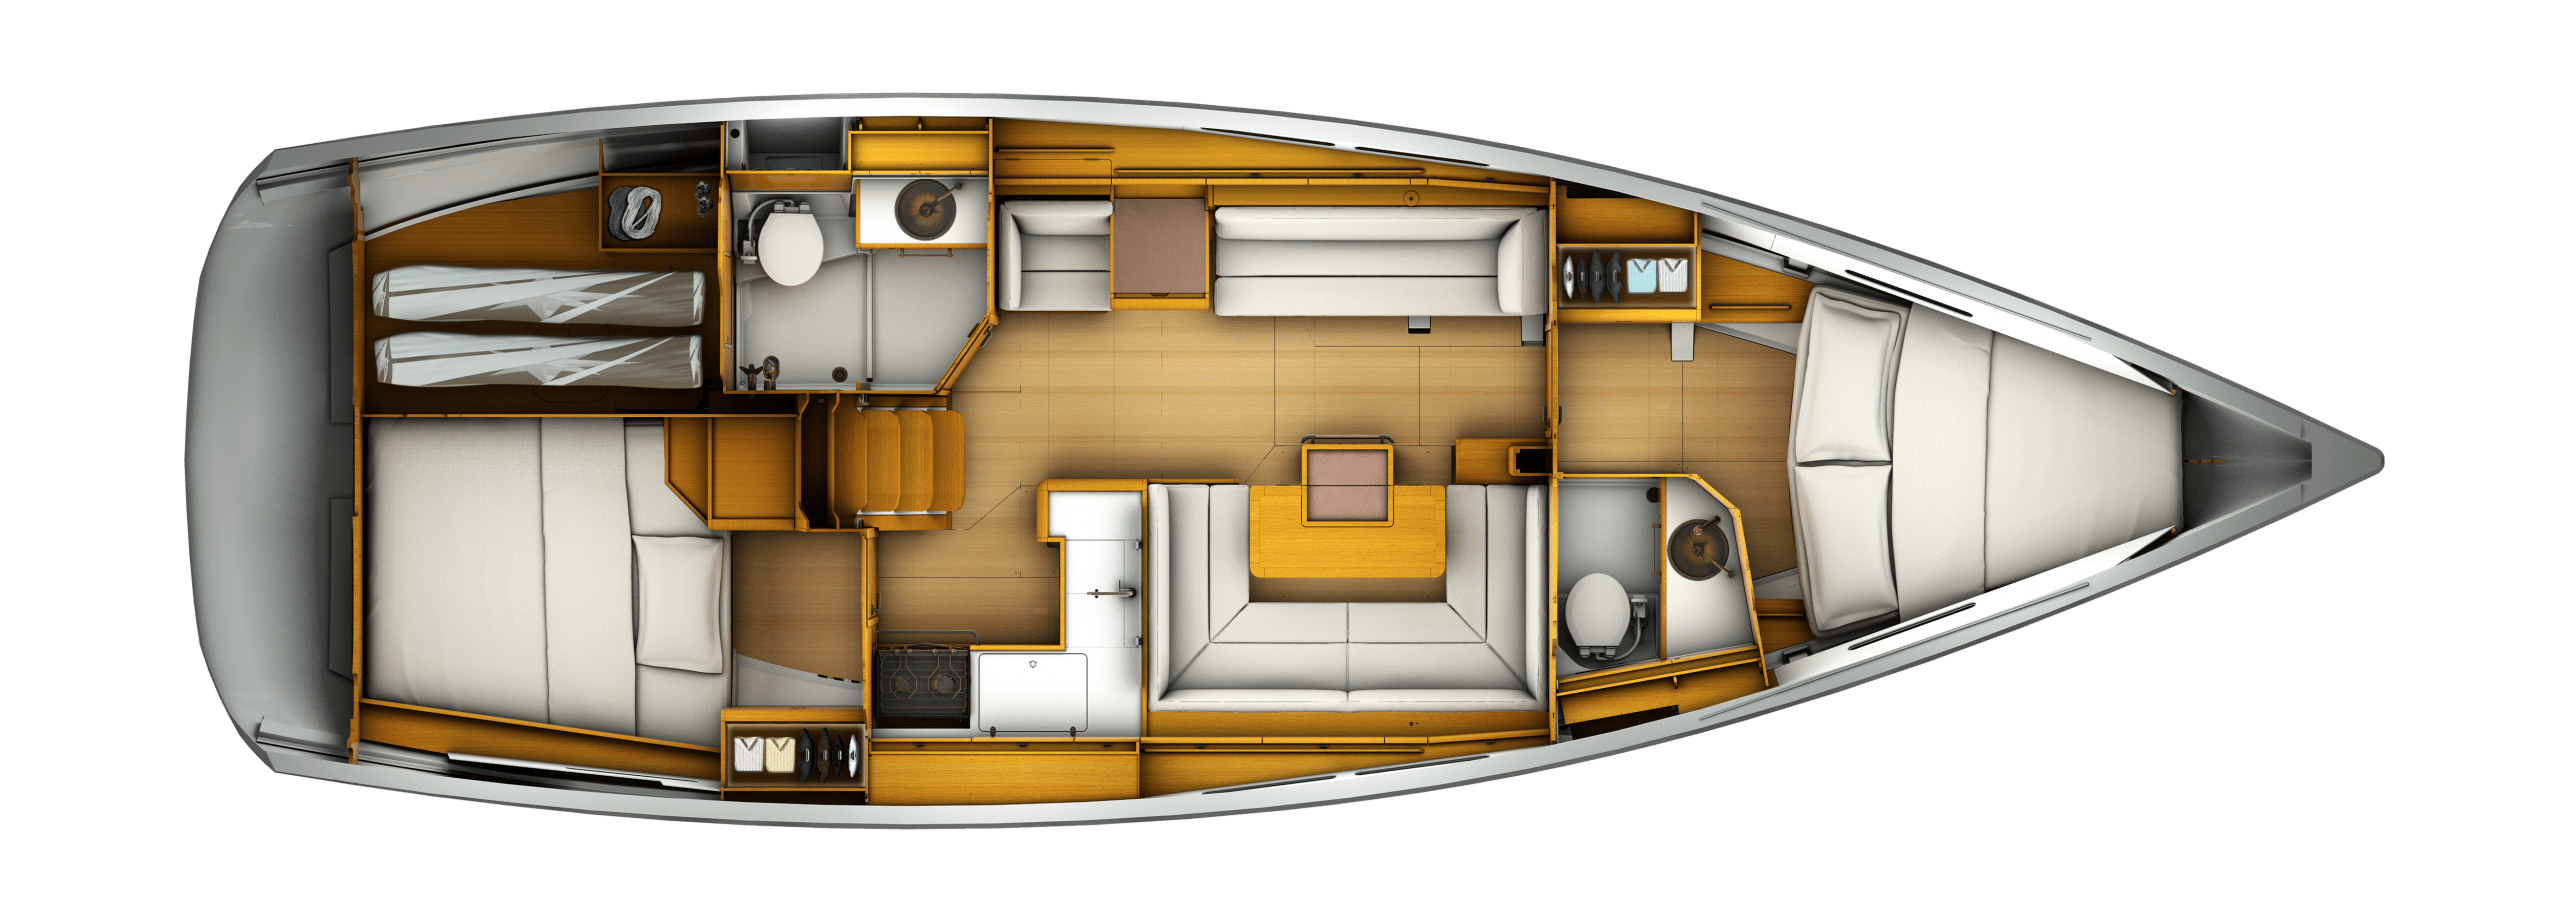 jeanneau-sun-odyssey-409-layout-2-cabins-2-heads